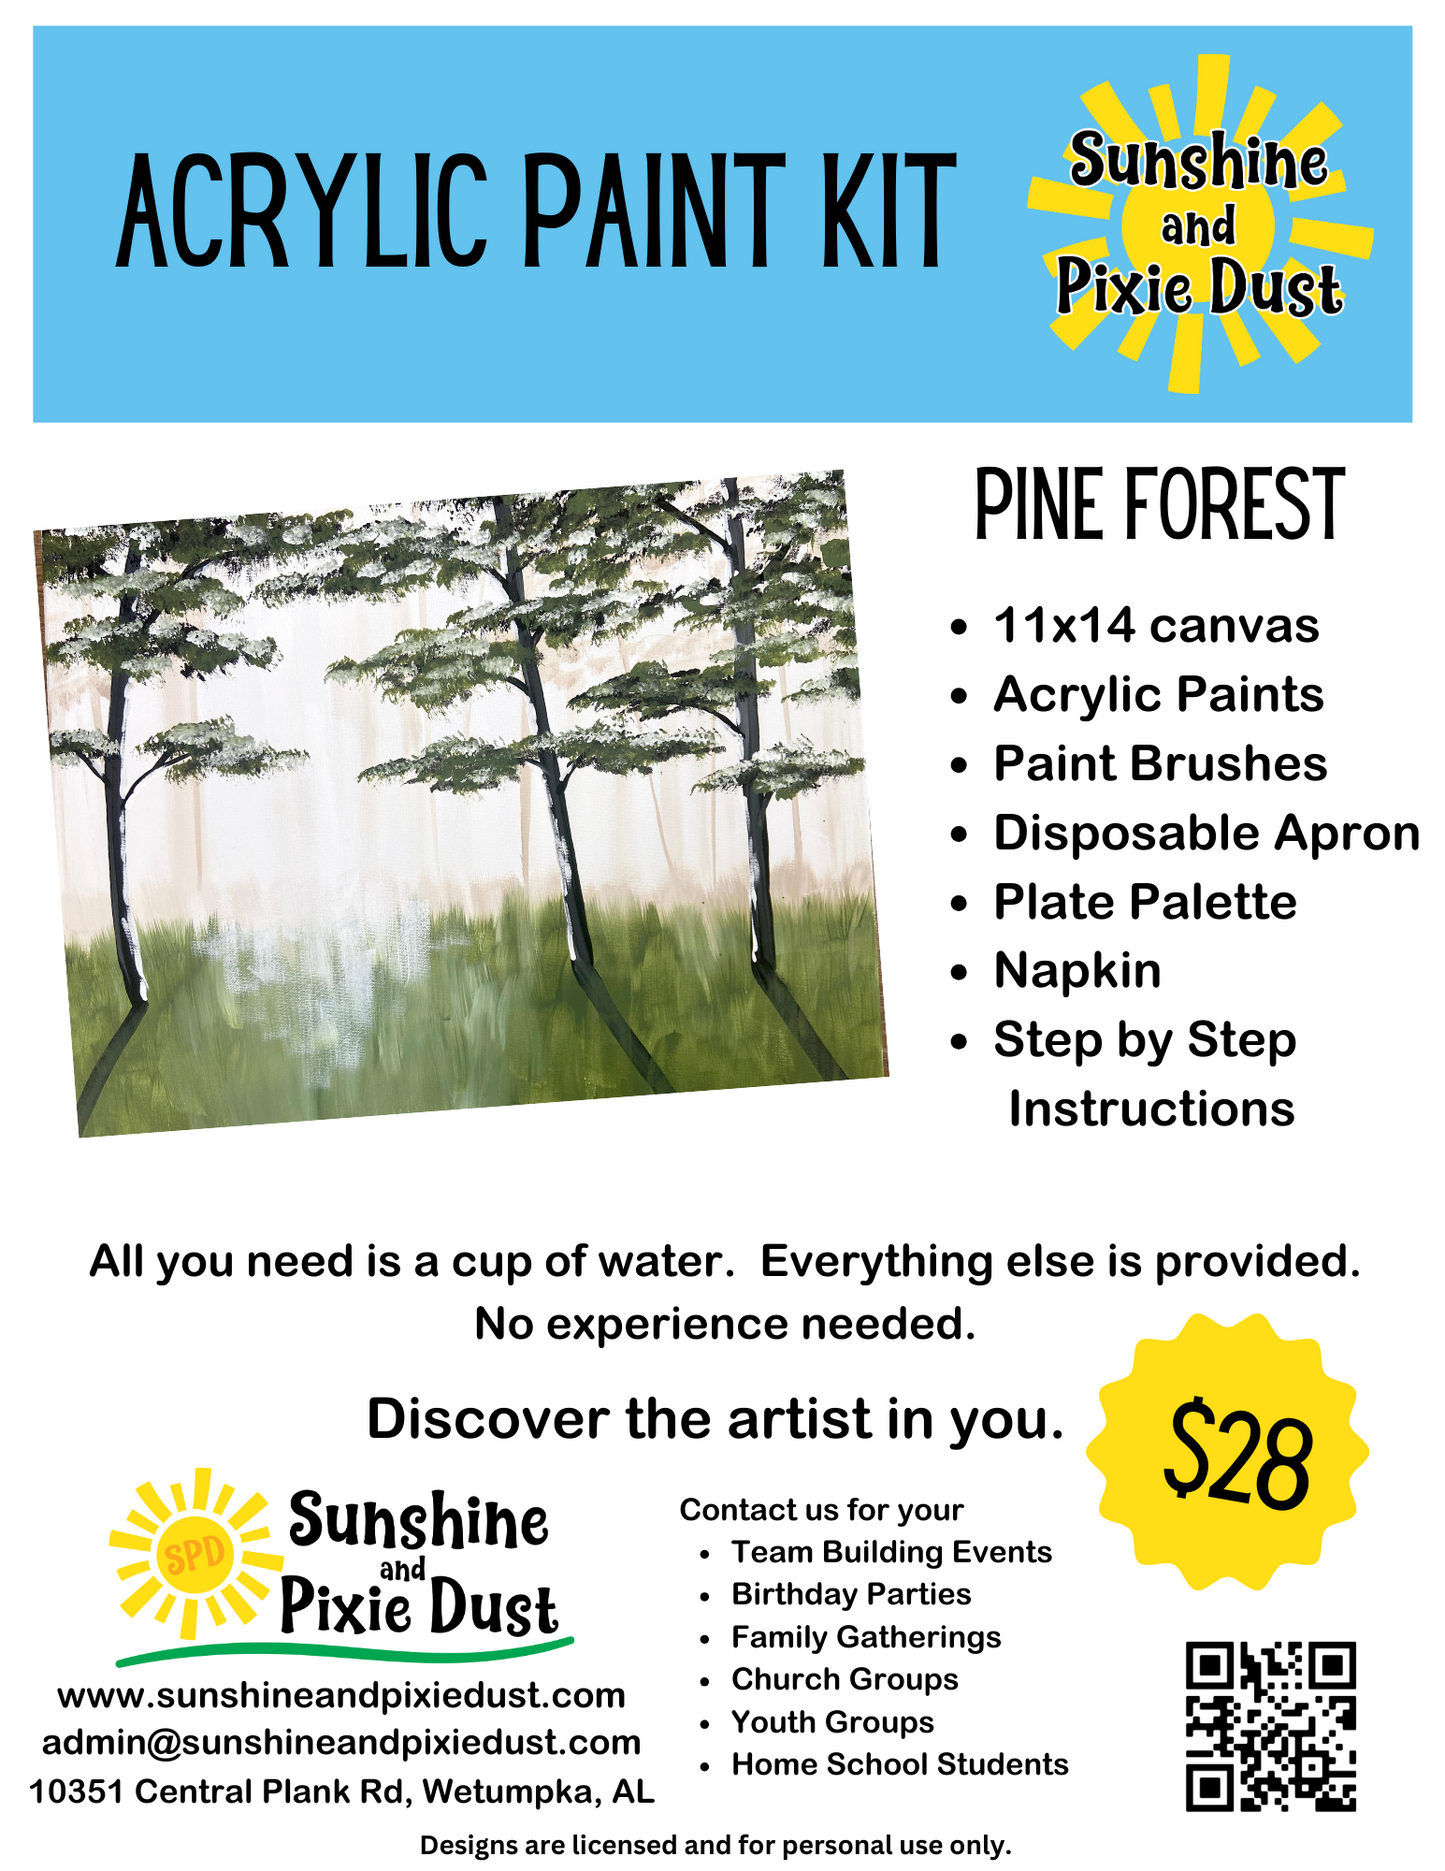 Pine Forest Acrylic Paint Kit